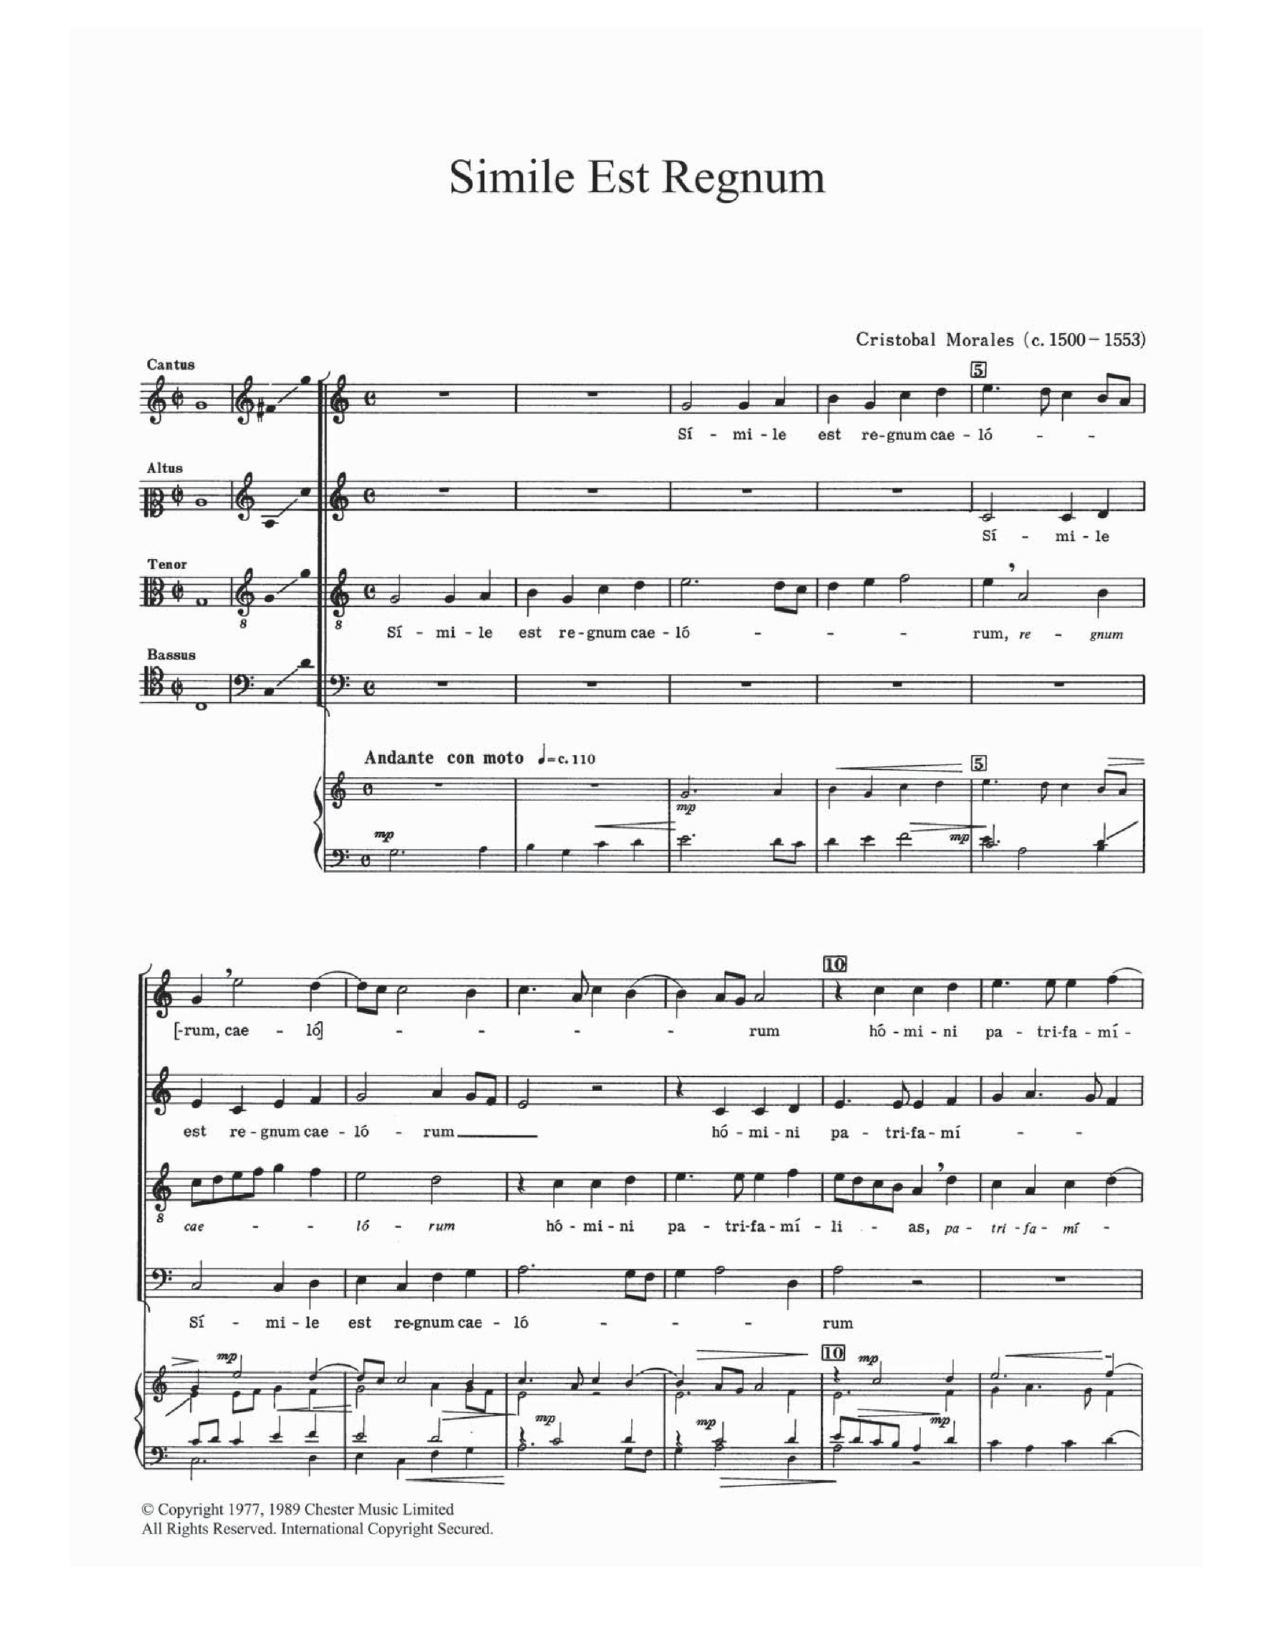 Cristobal de Morales Simile Est Regnum sheet music notes and chords arranged for Choir